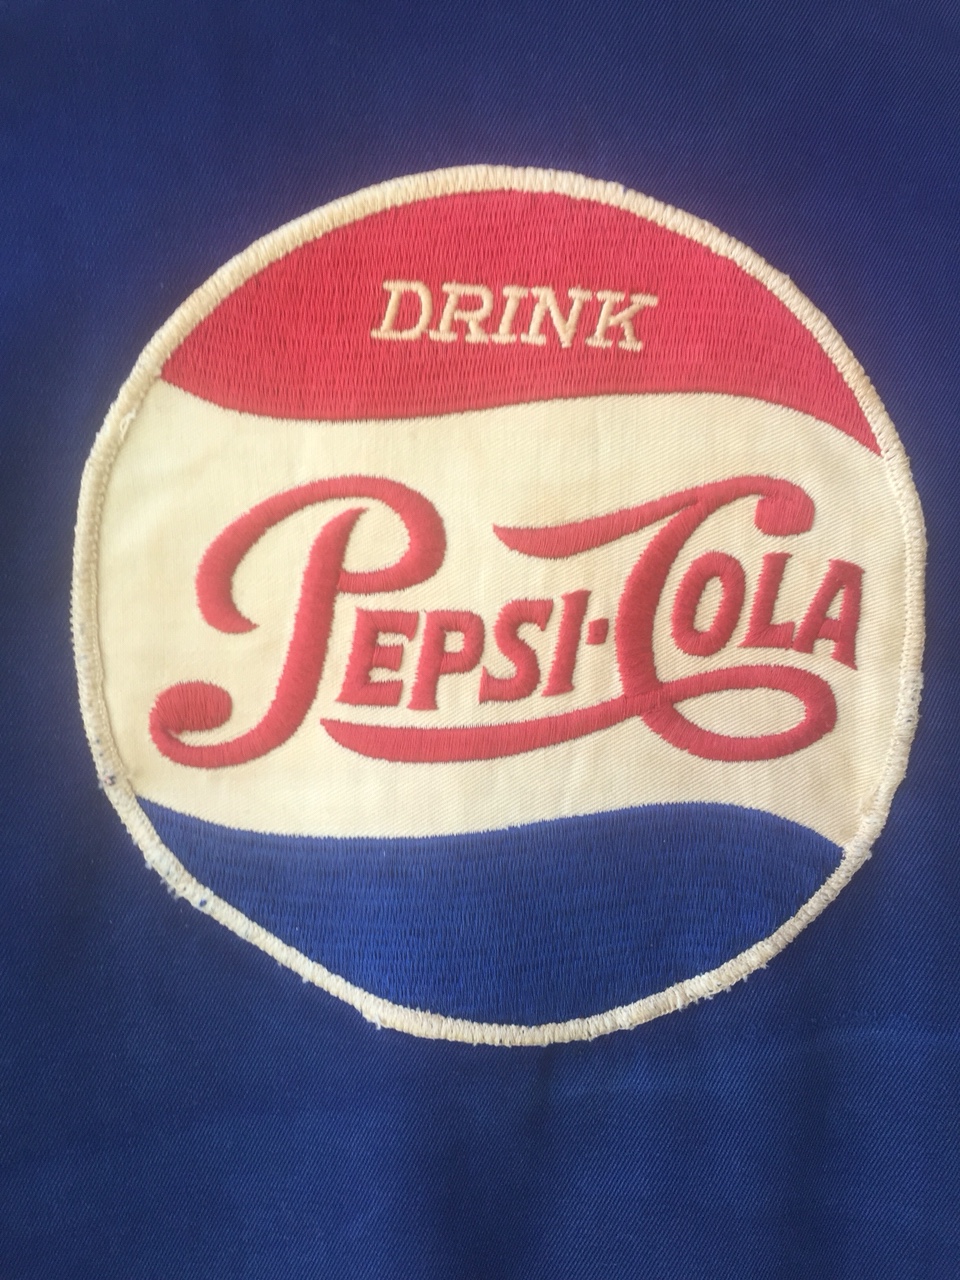 Pepsi Delivery Jacket circa 1950 | The Fedora Lounge